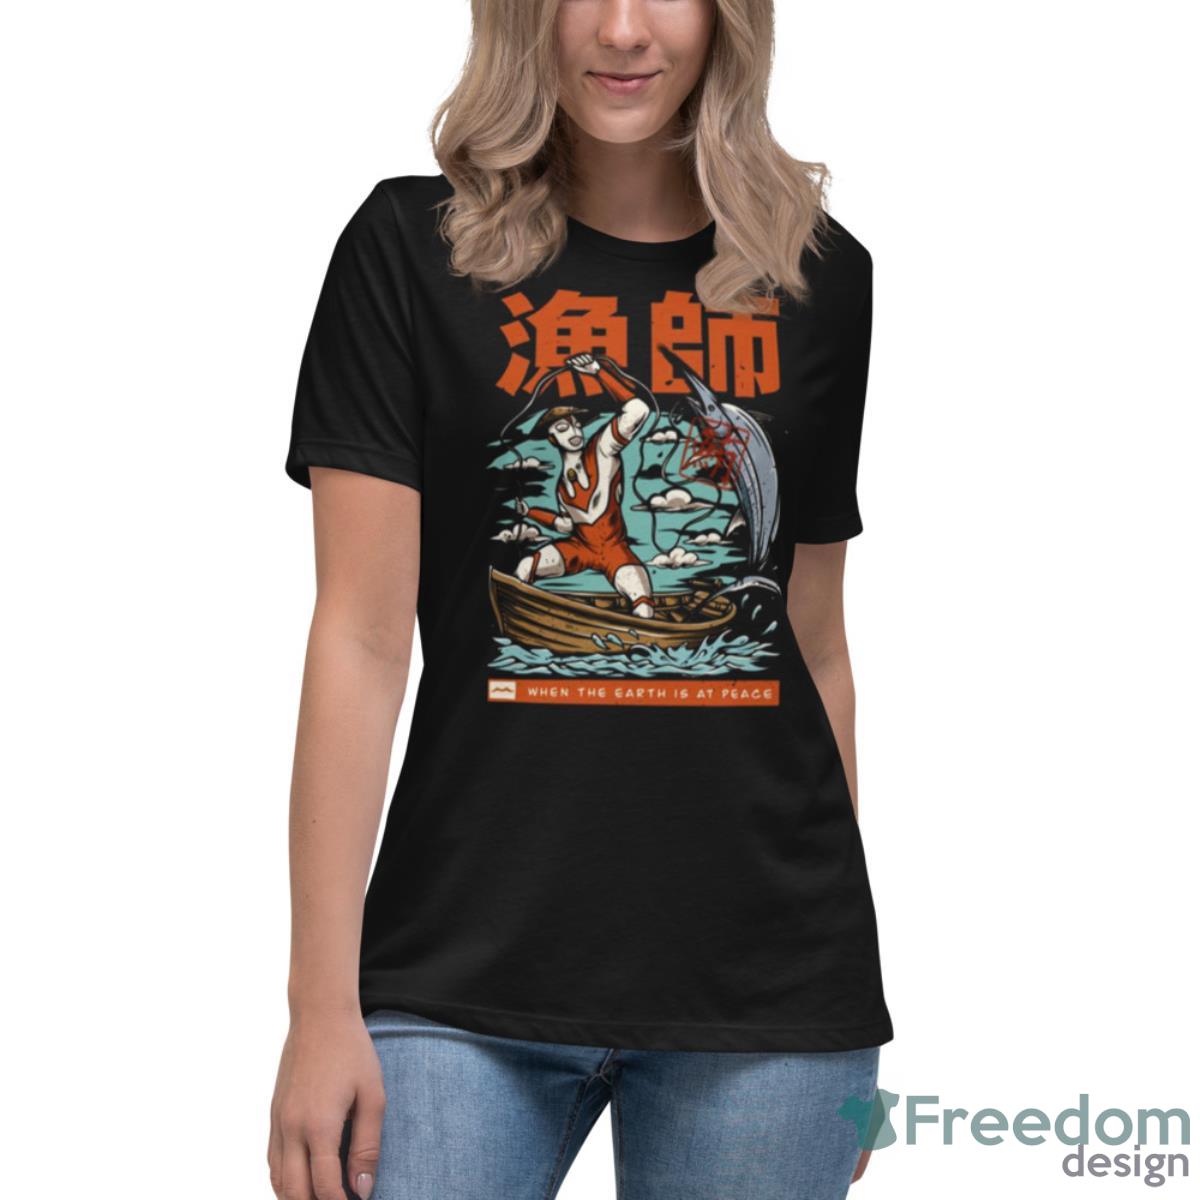 Fisherman Hero Ultraman Shirt